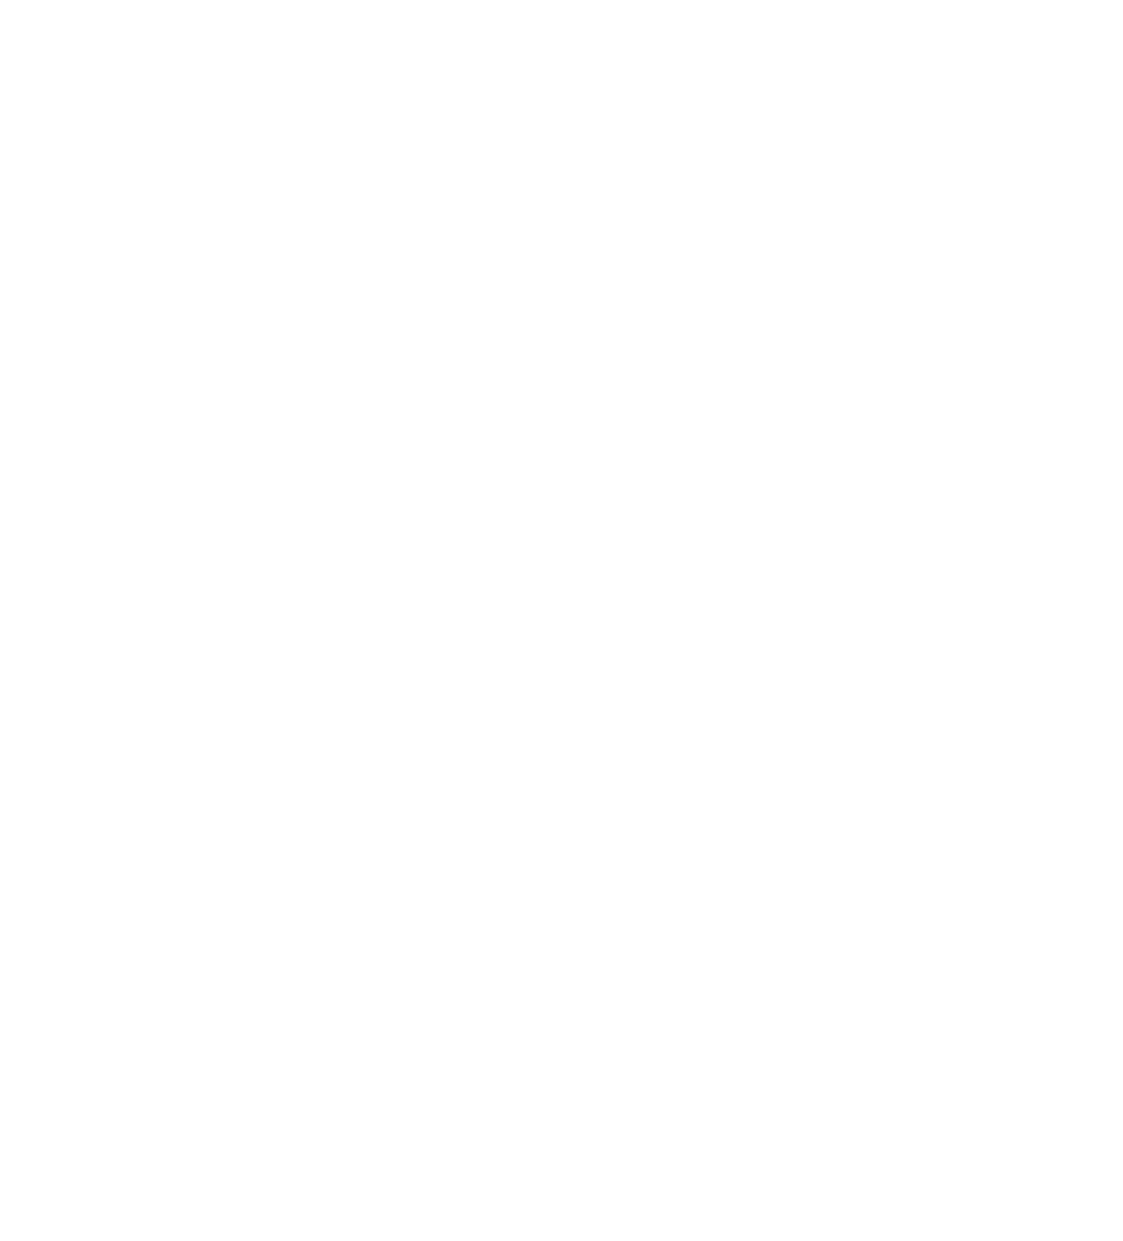 City Optik Stockholm